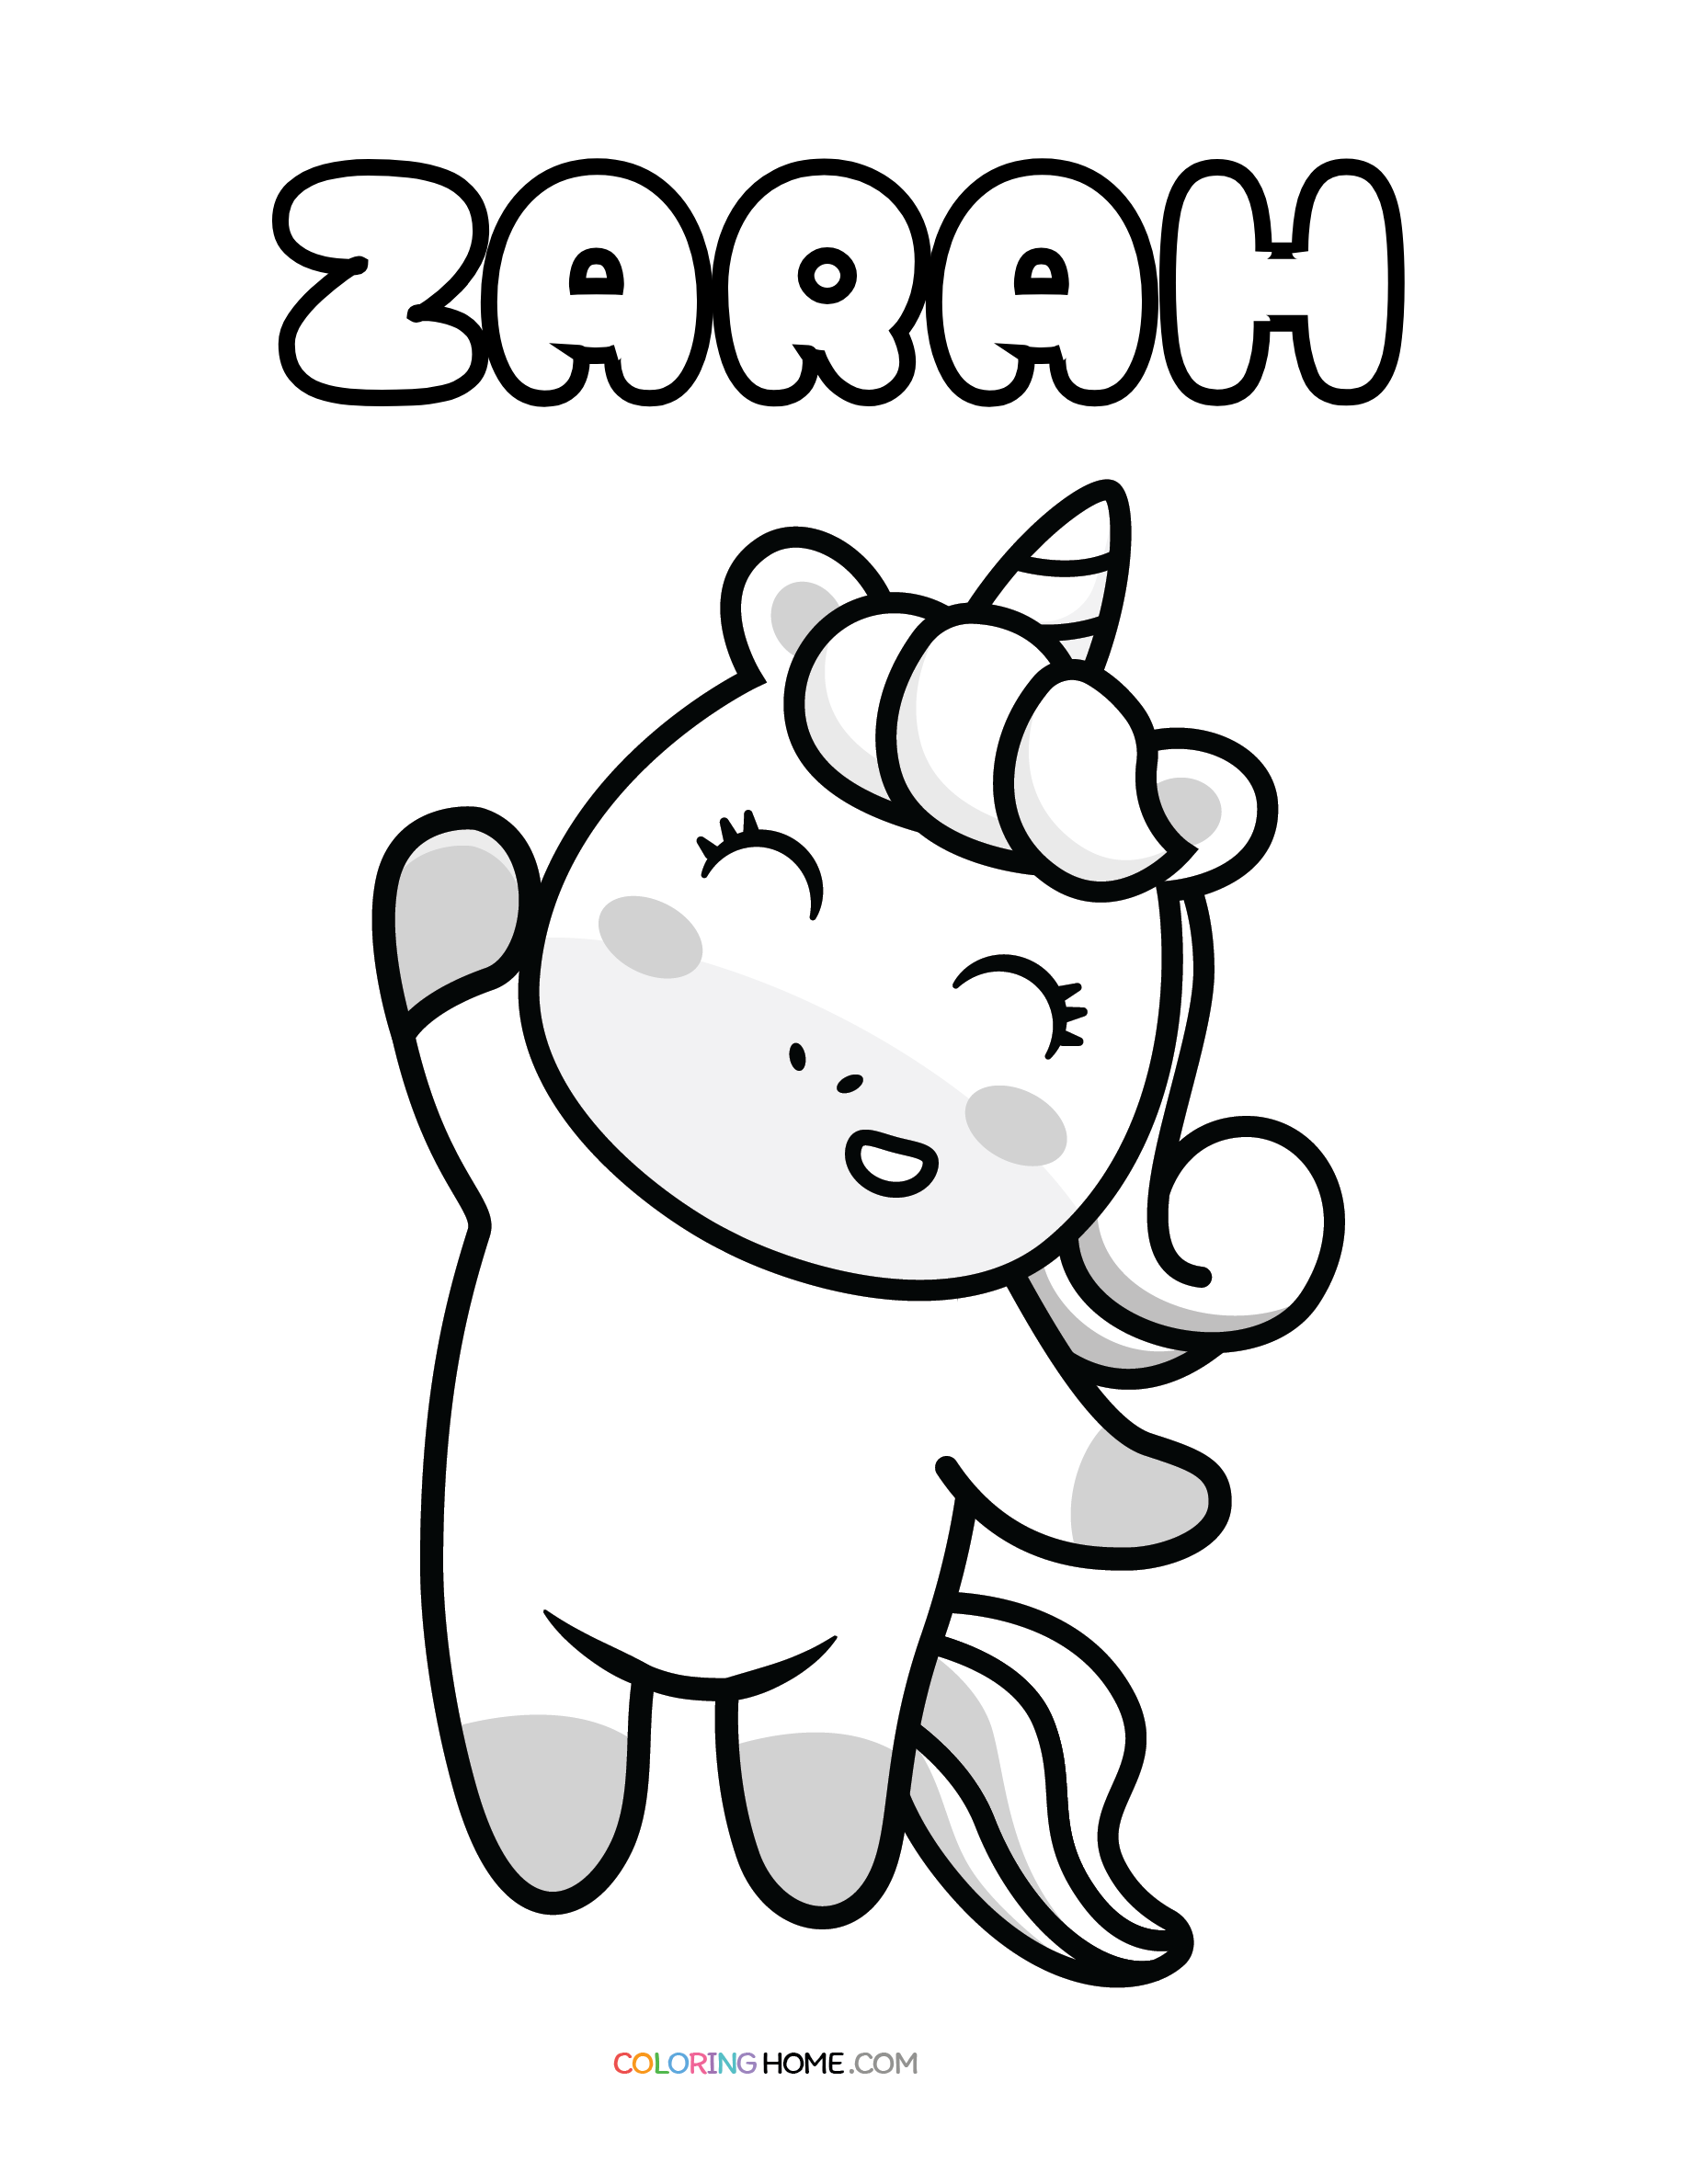 Zarah unicorn coloring page